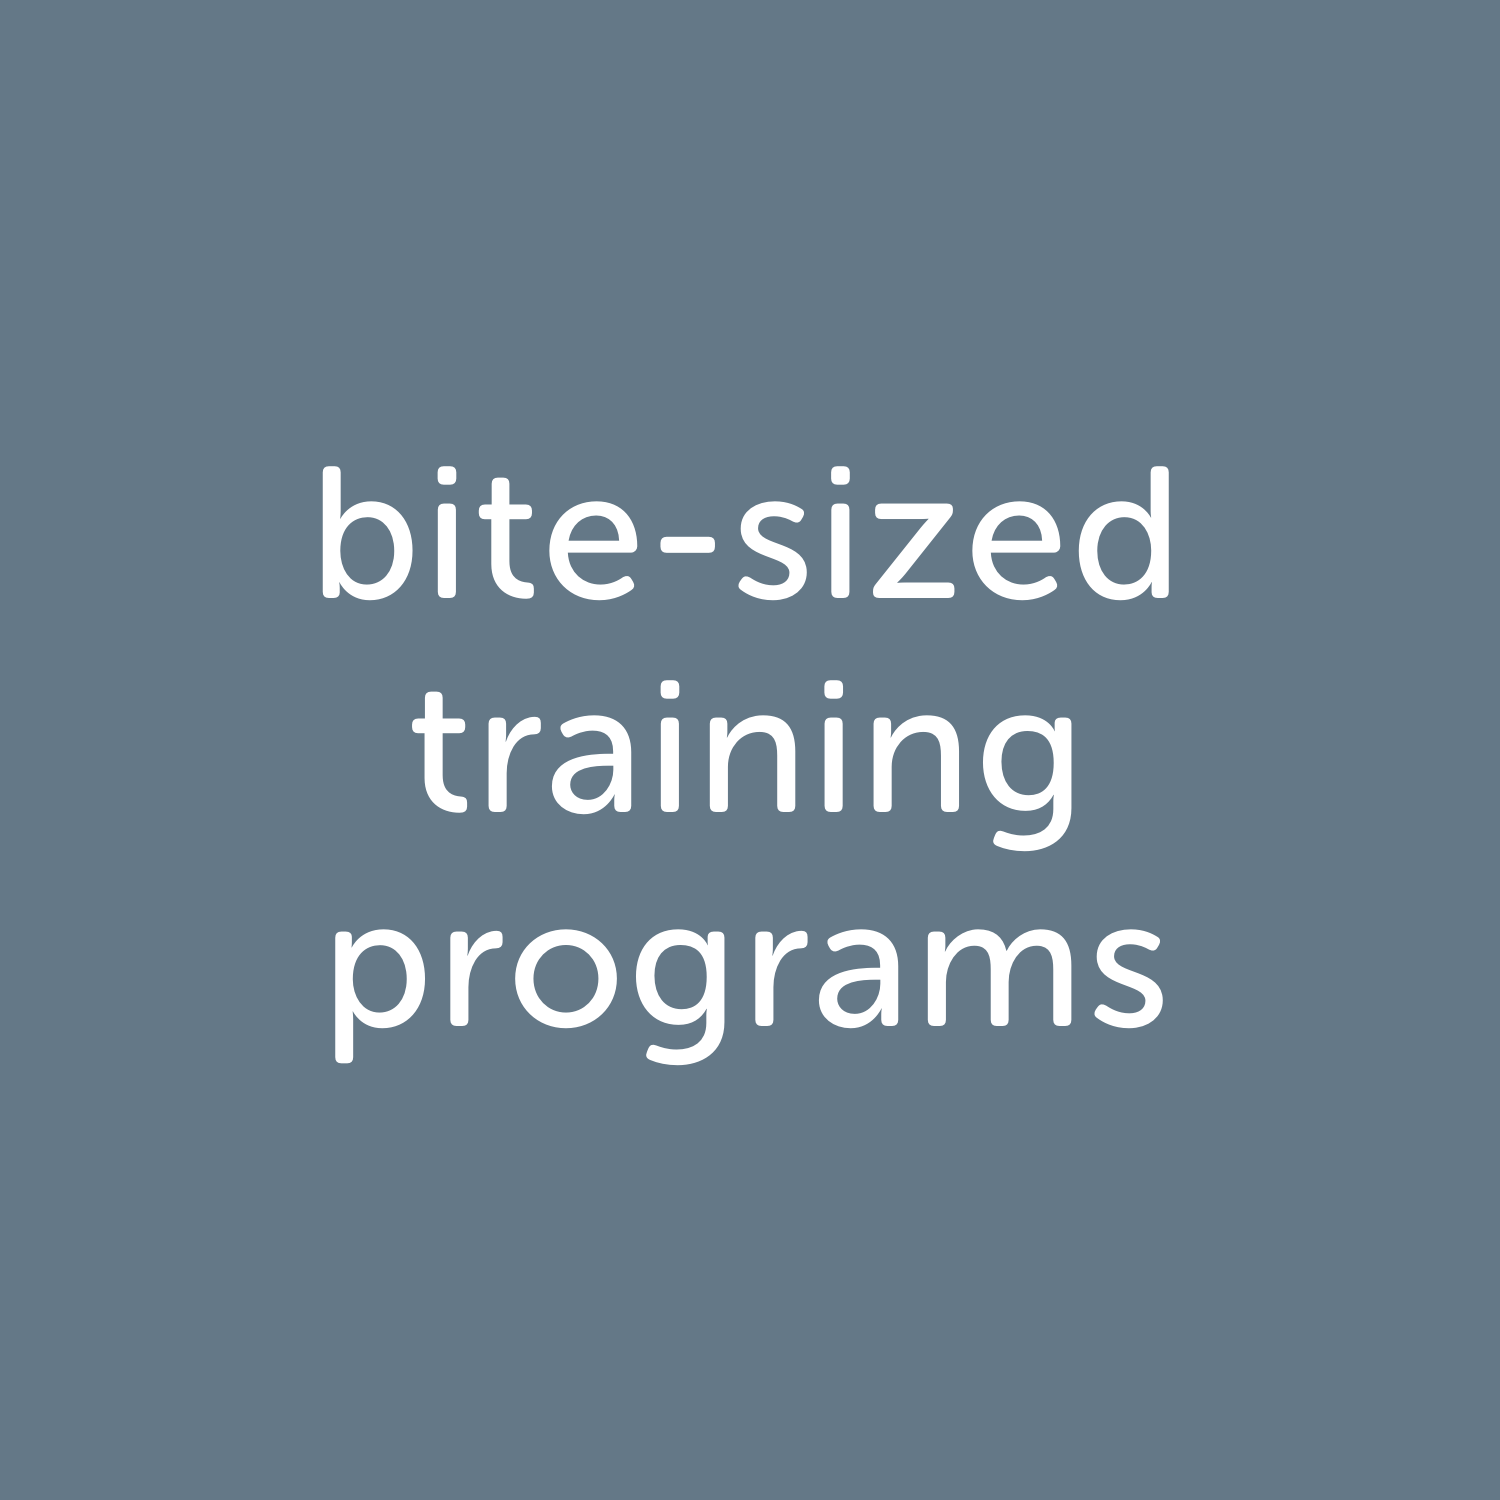 Bite-sized training programs